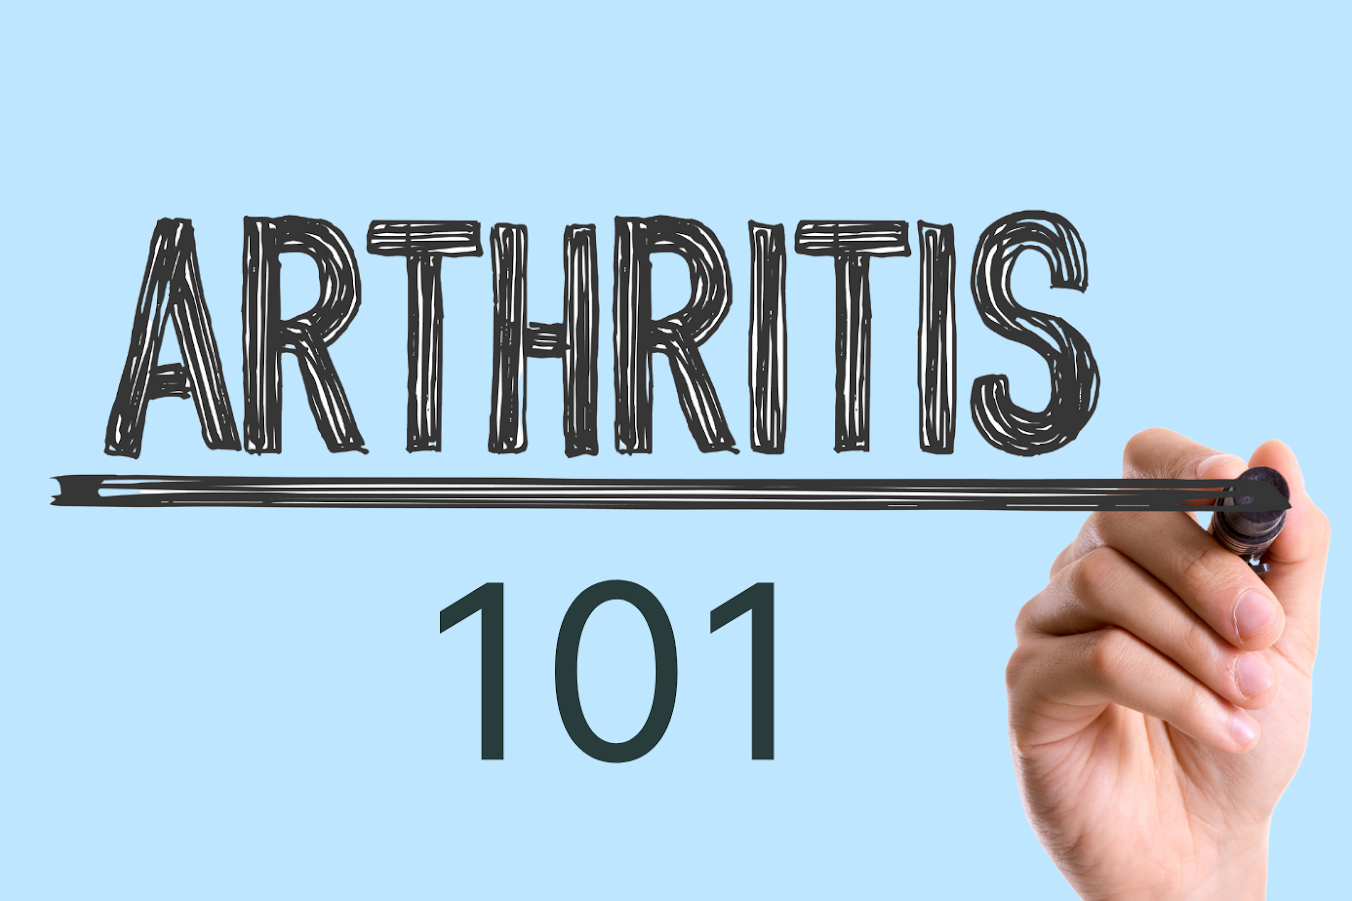 Arthritis Types